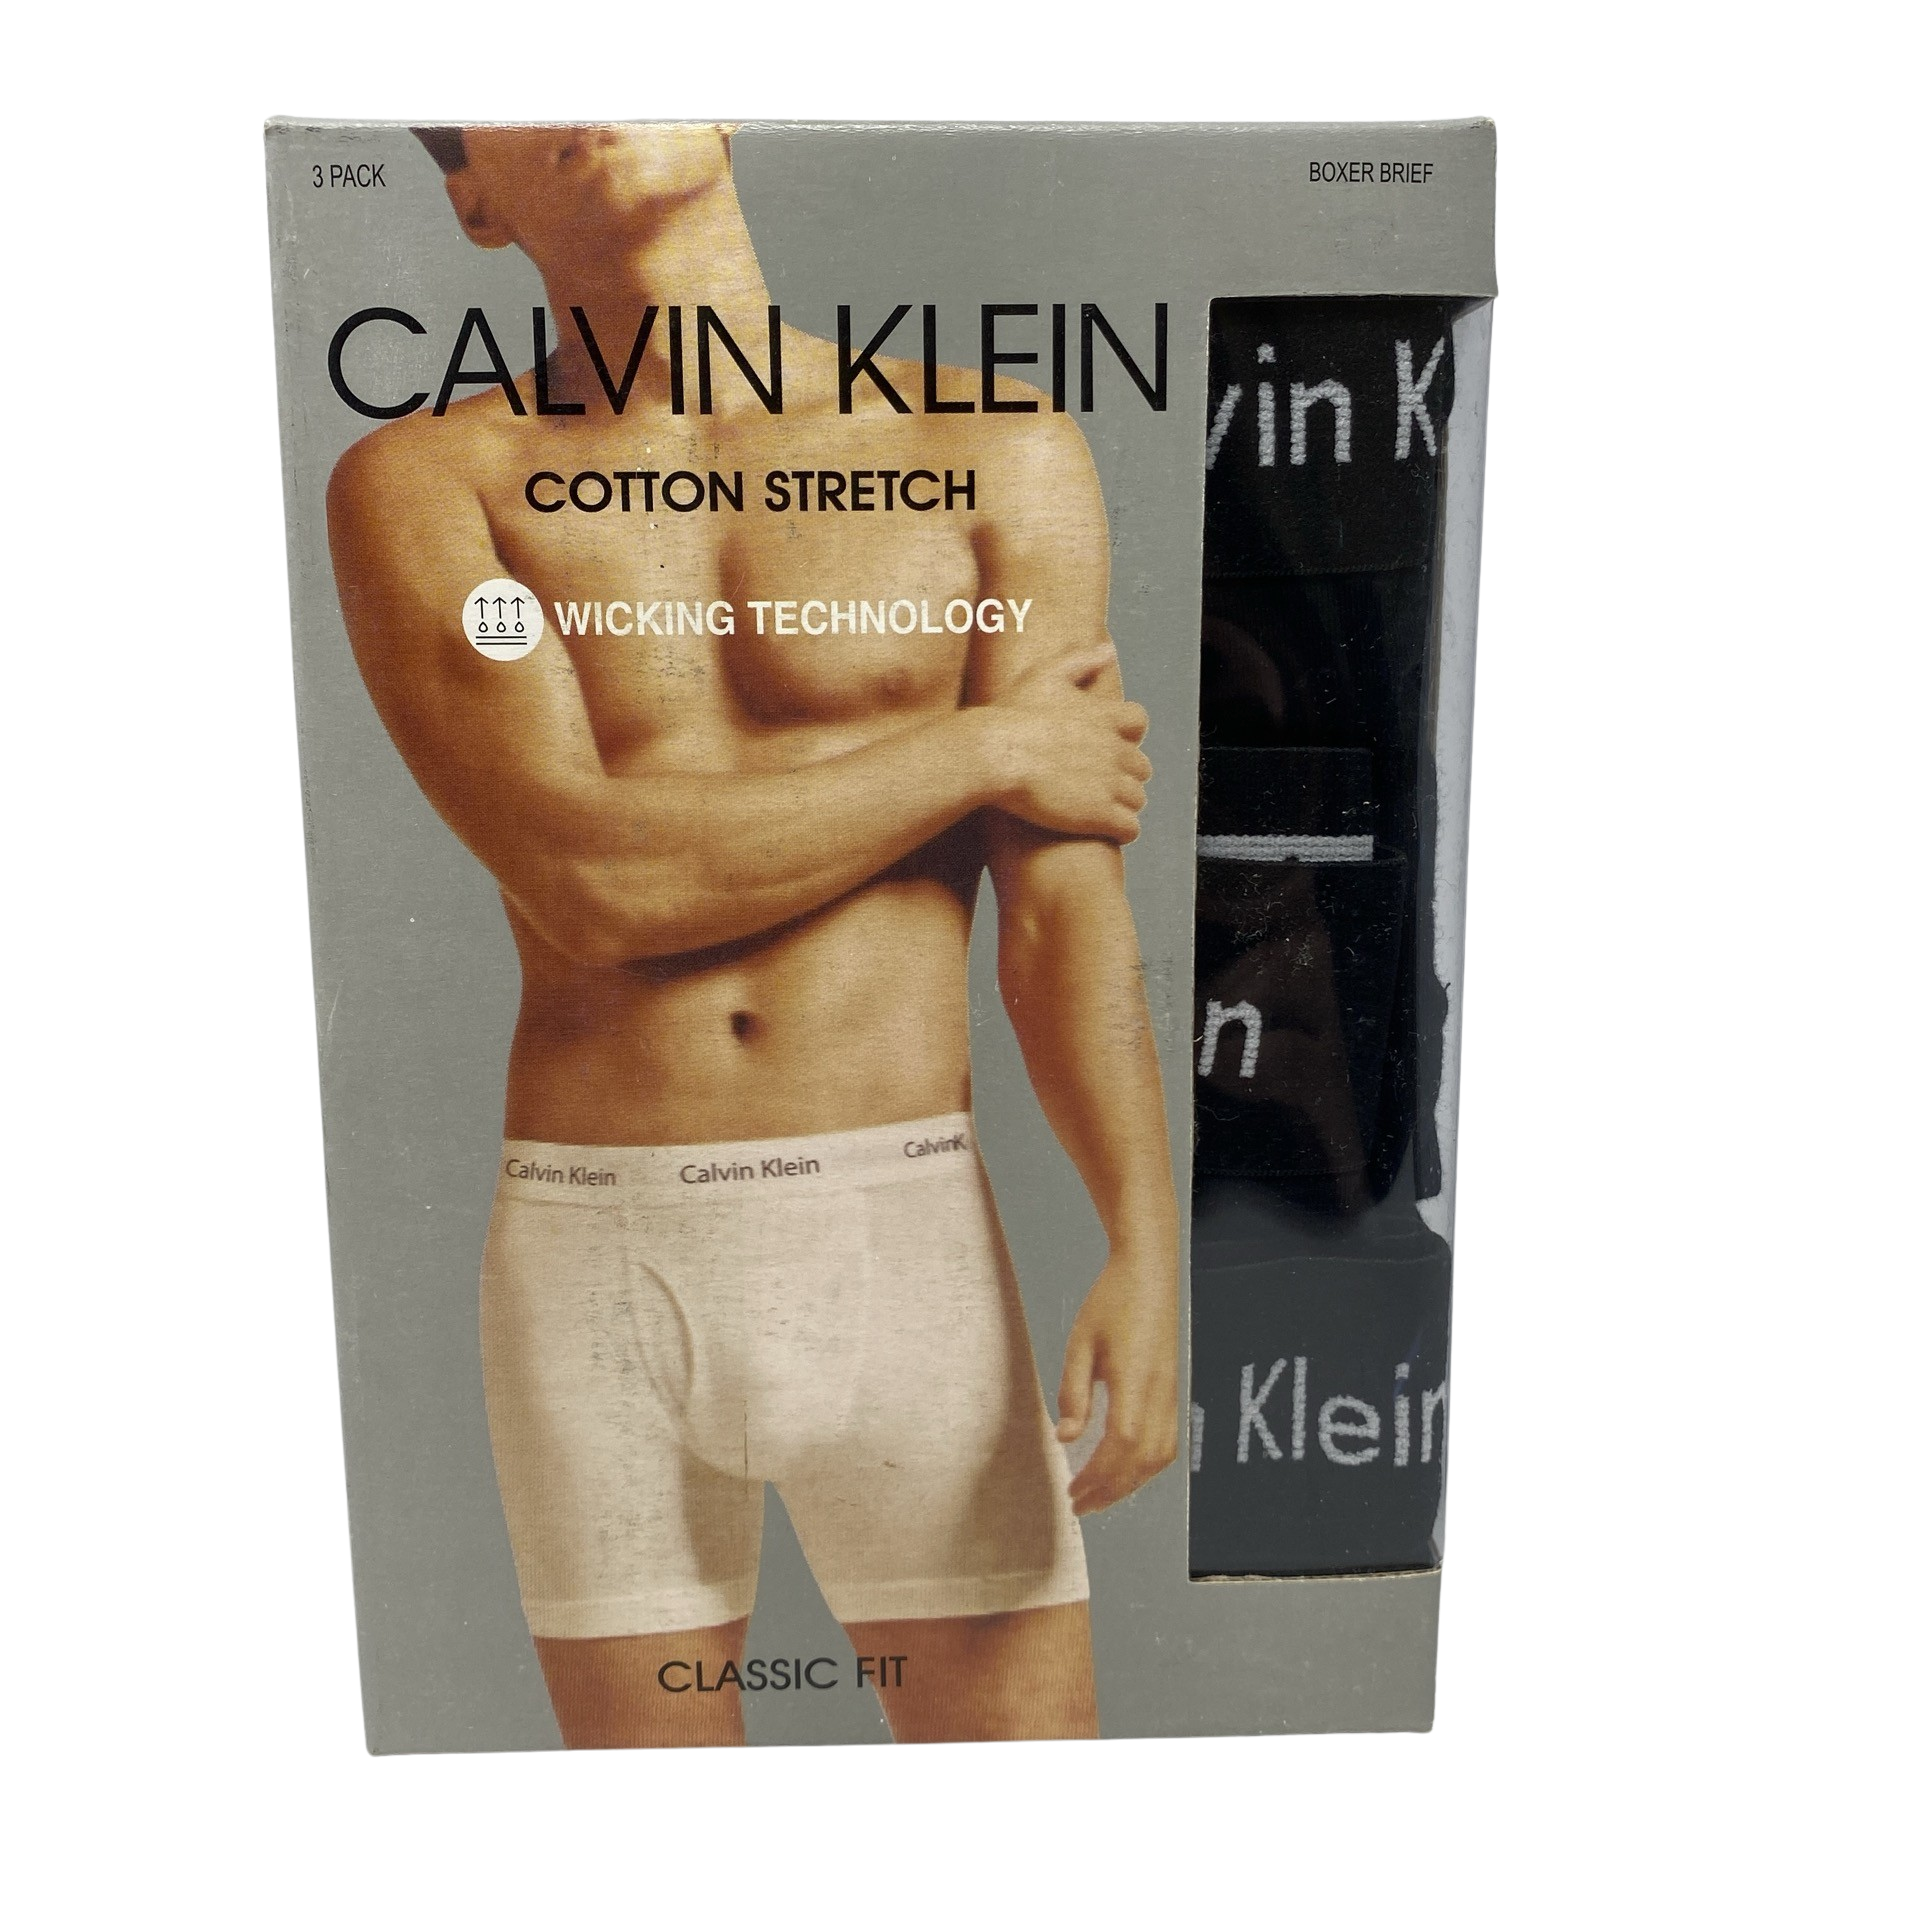 Calvin Klein Classic Fit Cotton Stretch Boxer Briefs